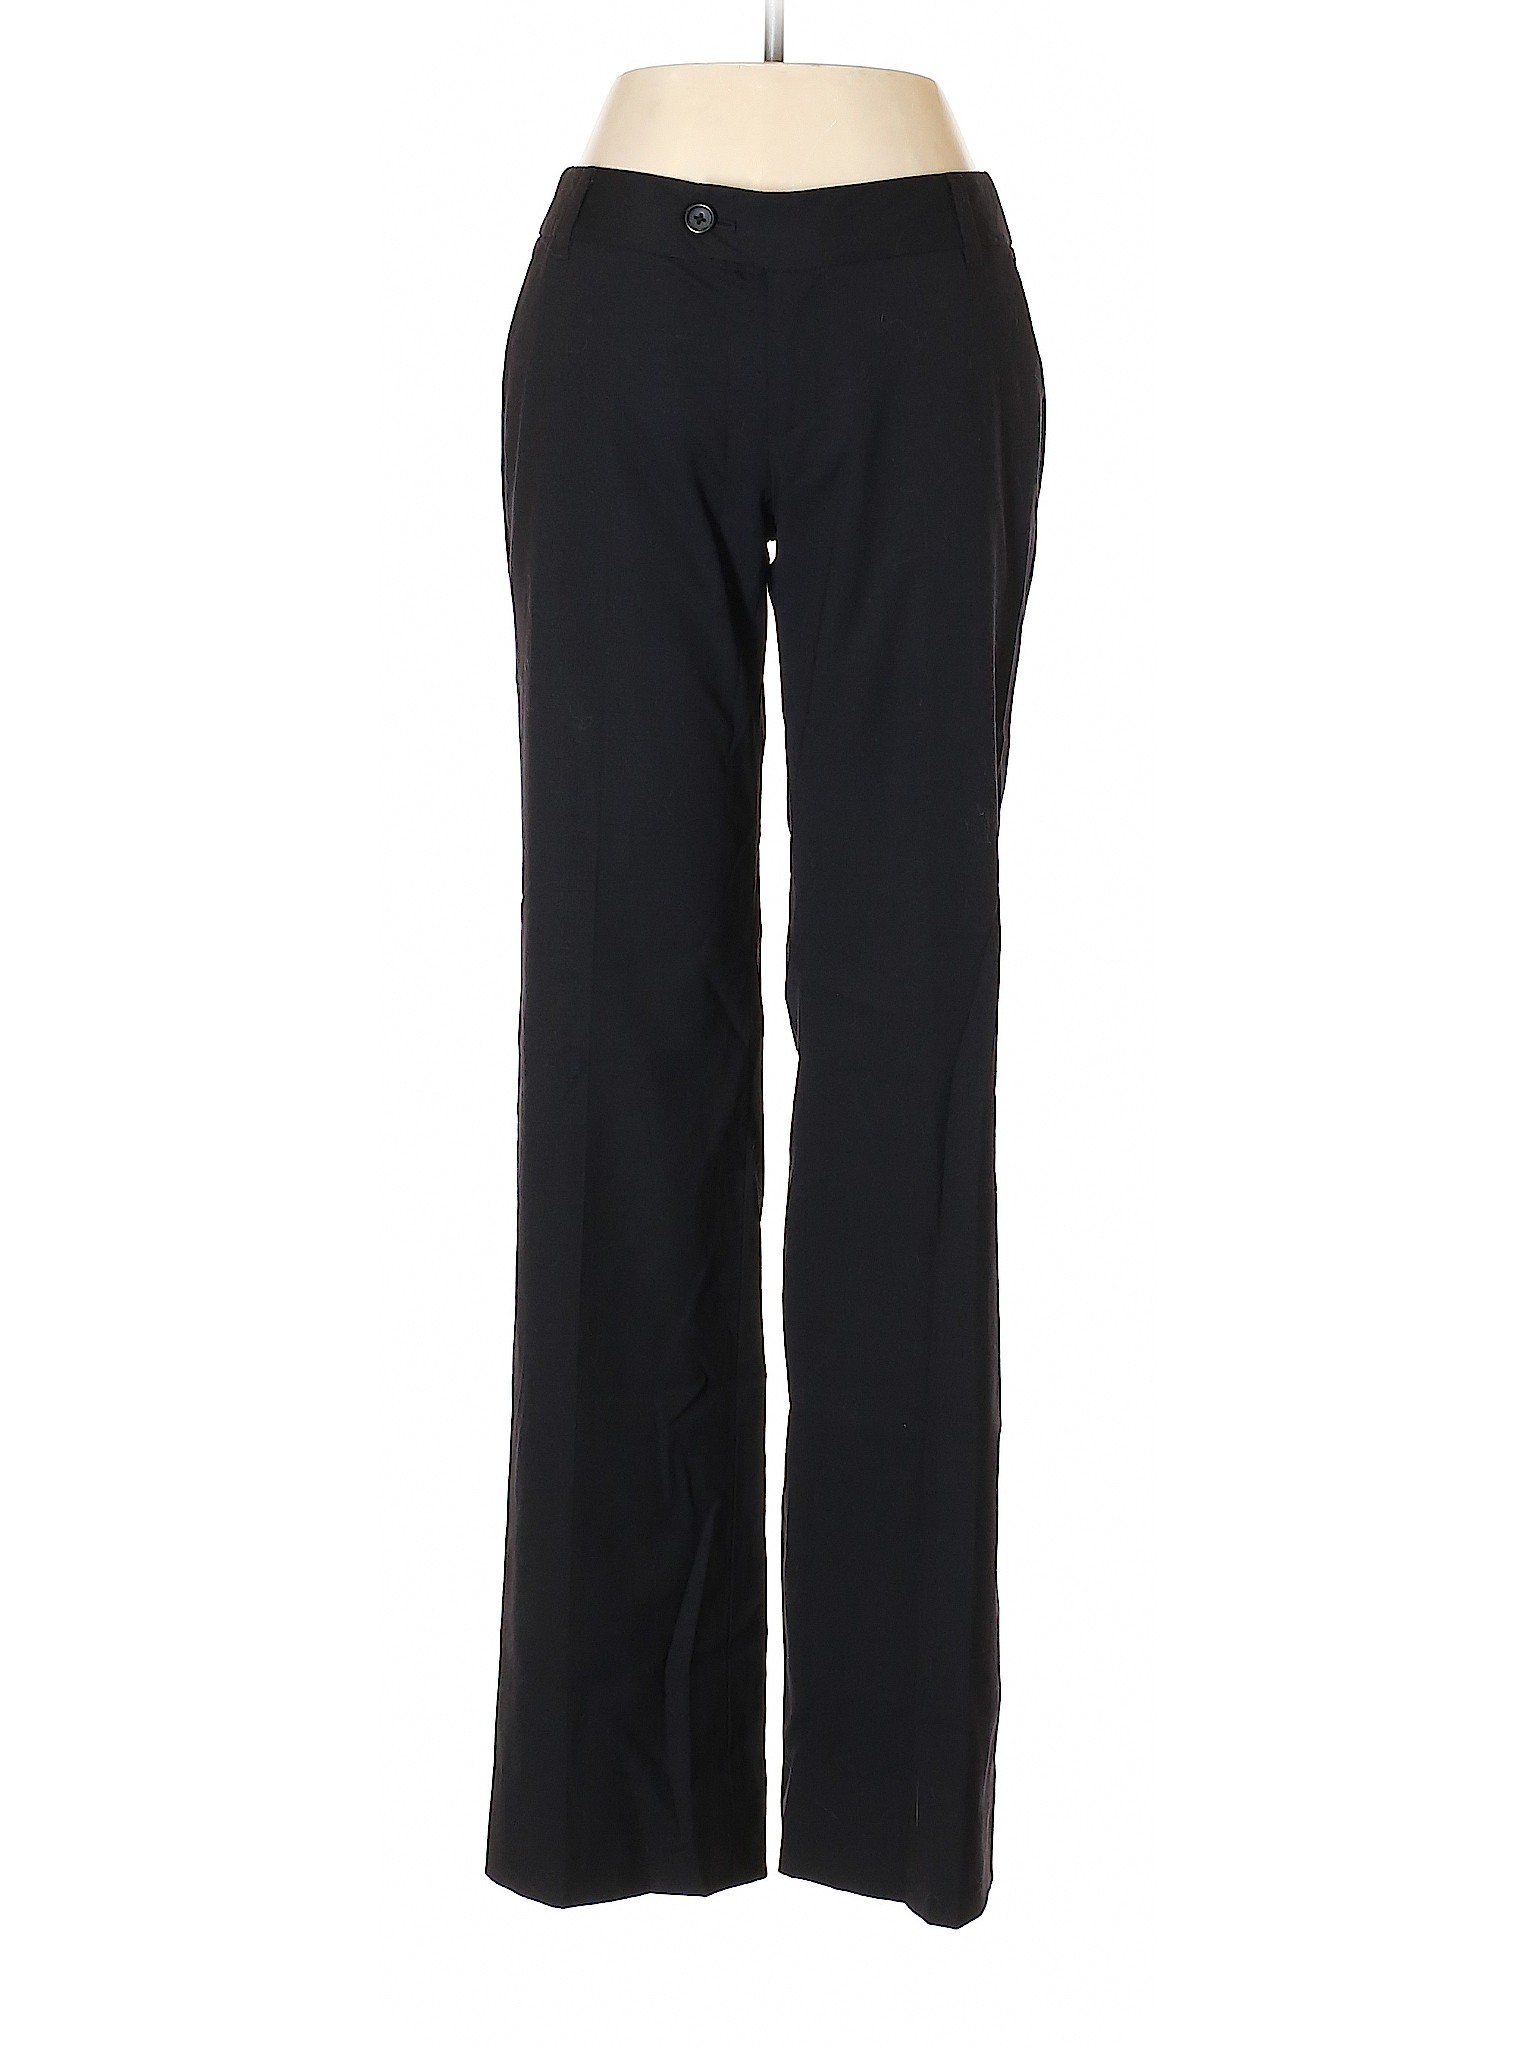 Banana Republic Factory Store Women Black Wool Pants 2 | eBay